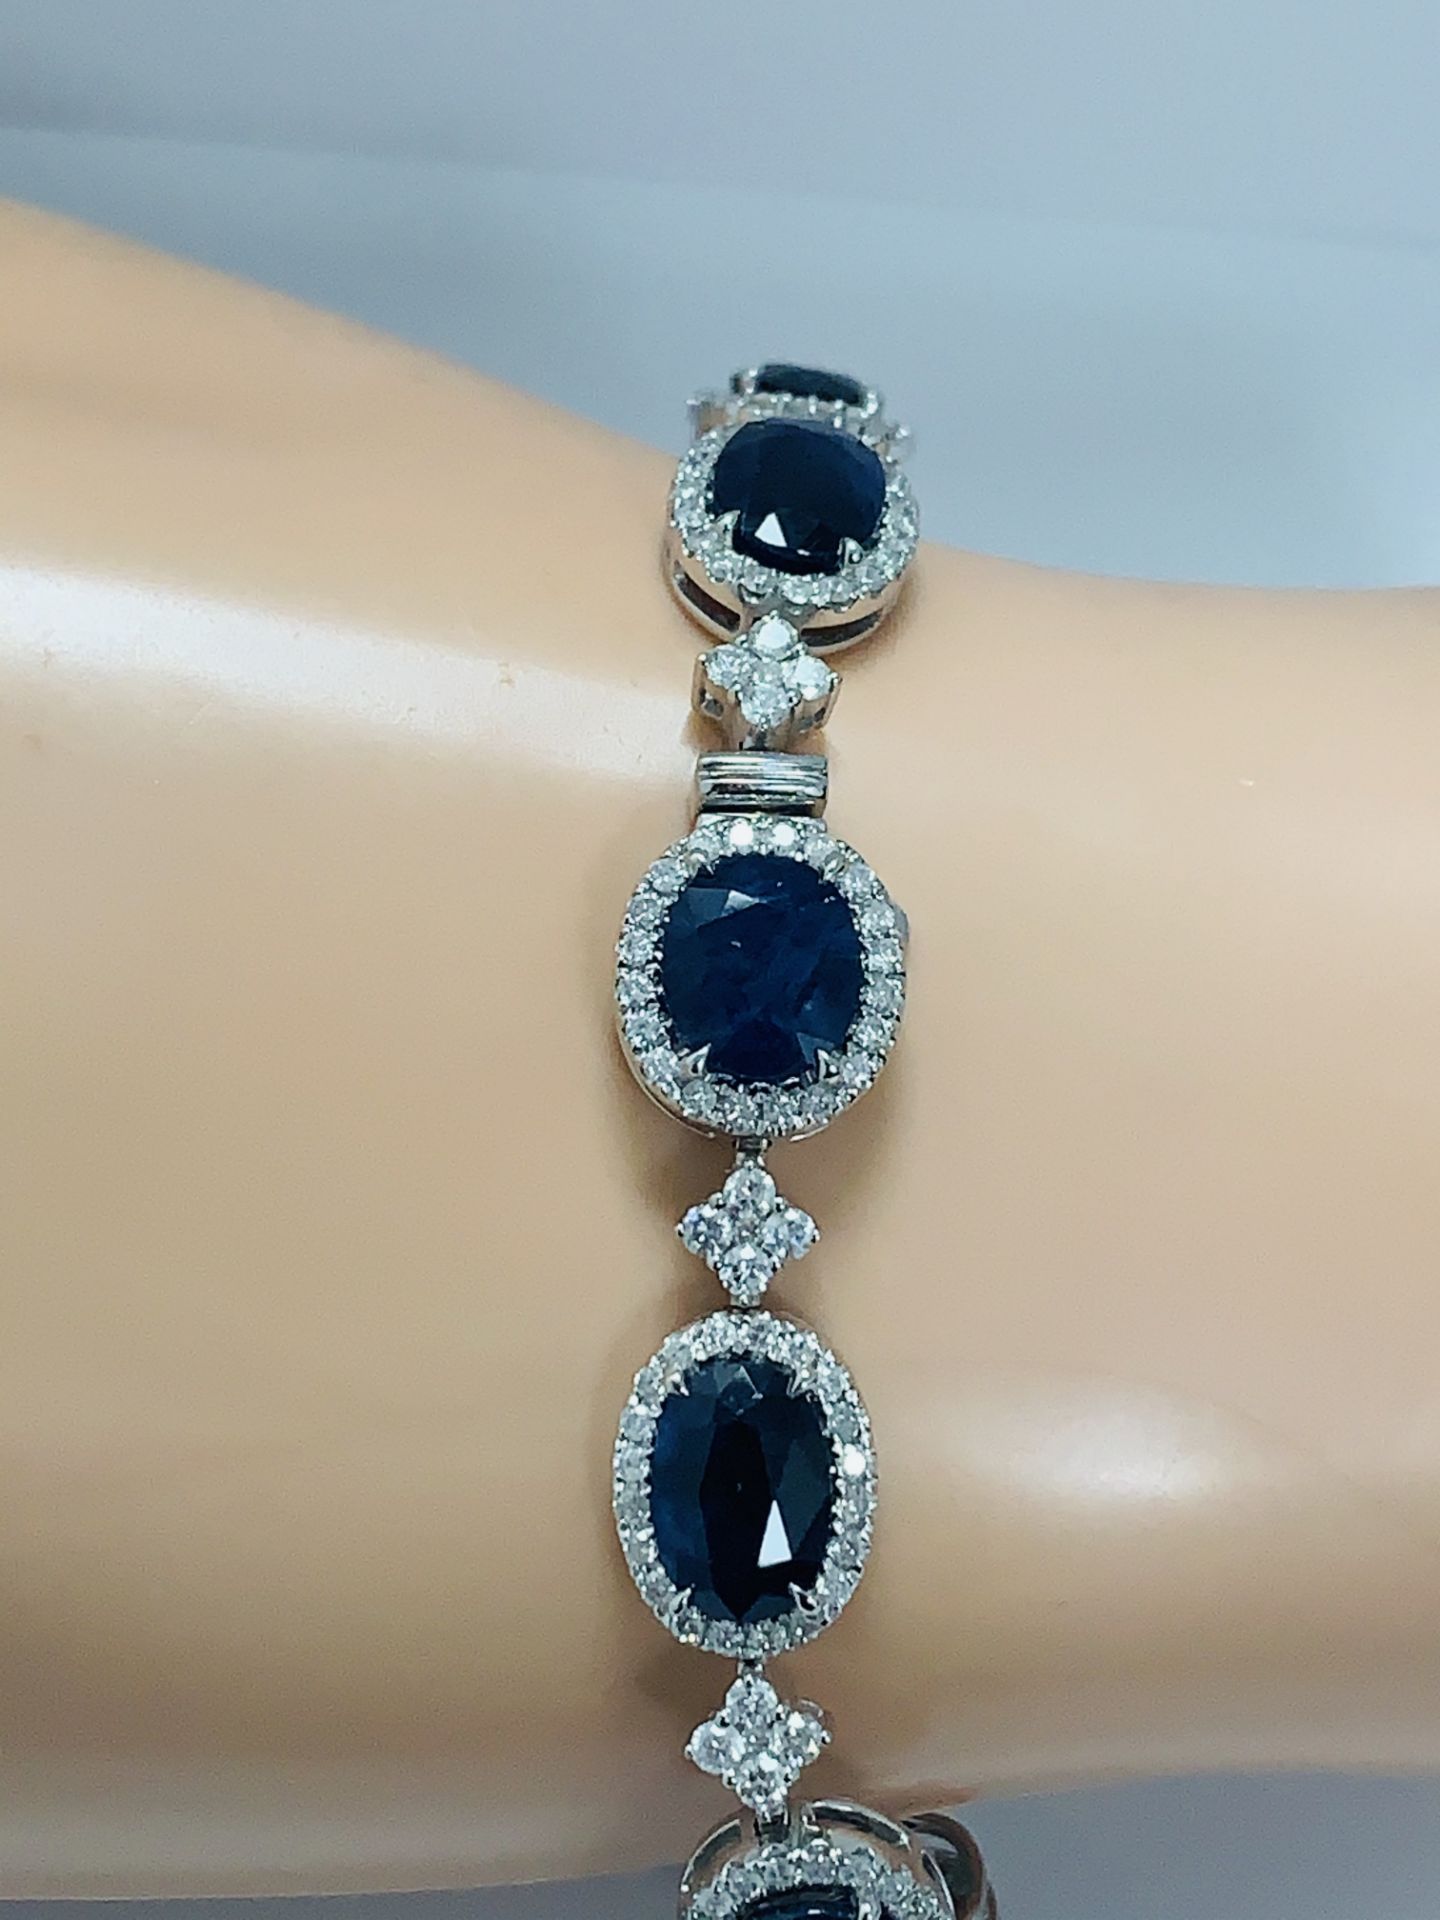 18ct White Gold Sapphire and Diamond Bracelet - Image 11 of 21